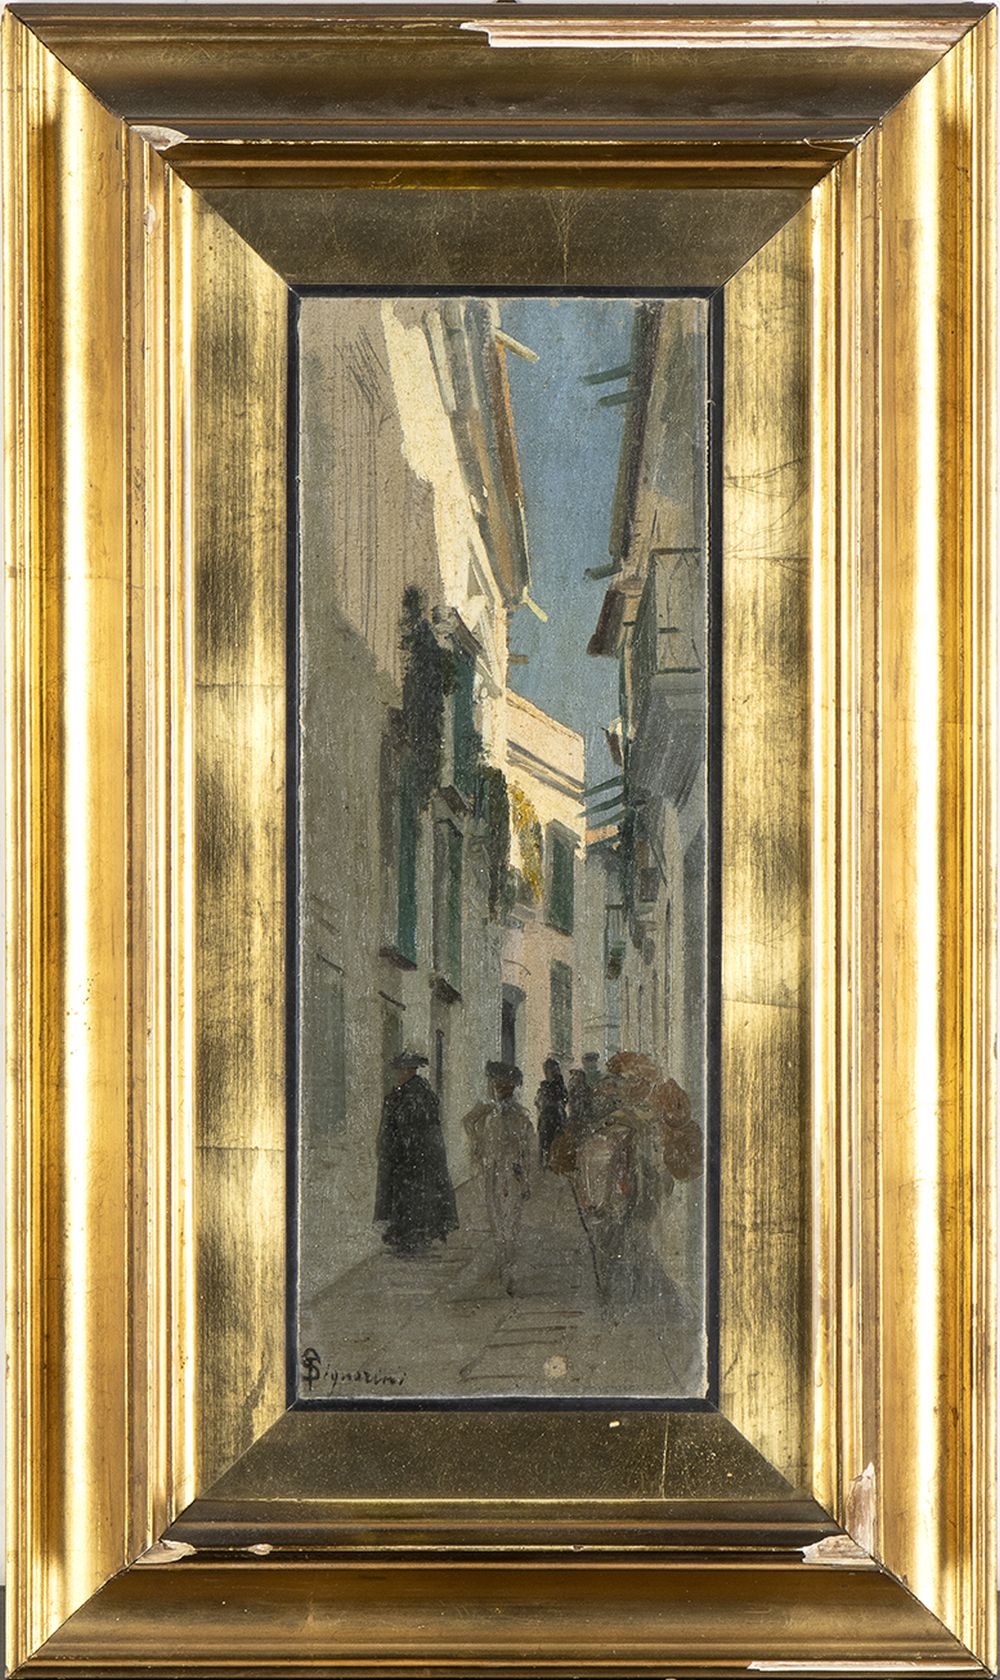 TELEMACO SIGNORINI (Florence, 1835 – 1901): Village alley - Image 2 of 2